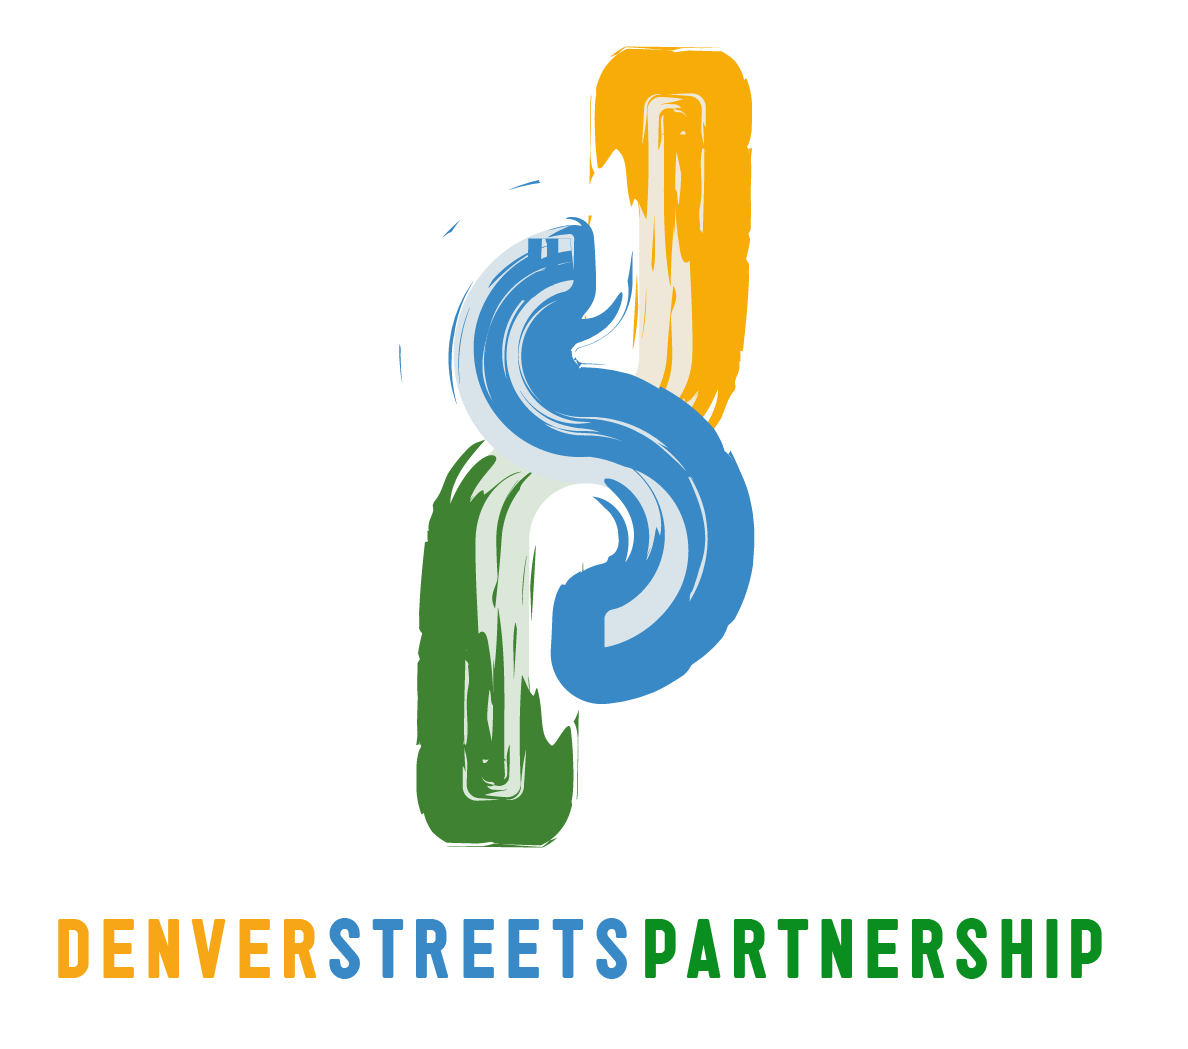 Partnership Logo - Denver Streets Partnership logo | OnSight